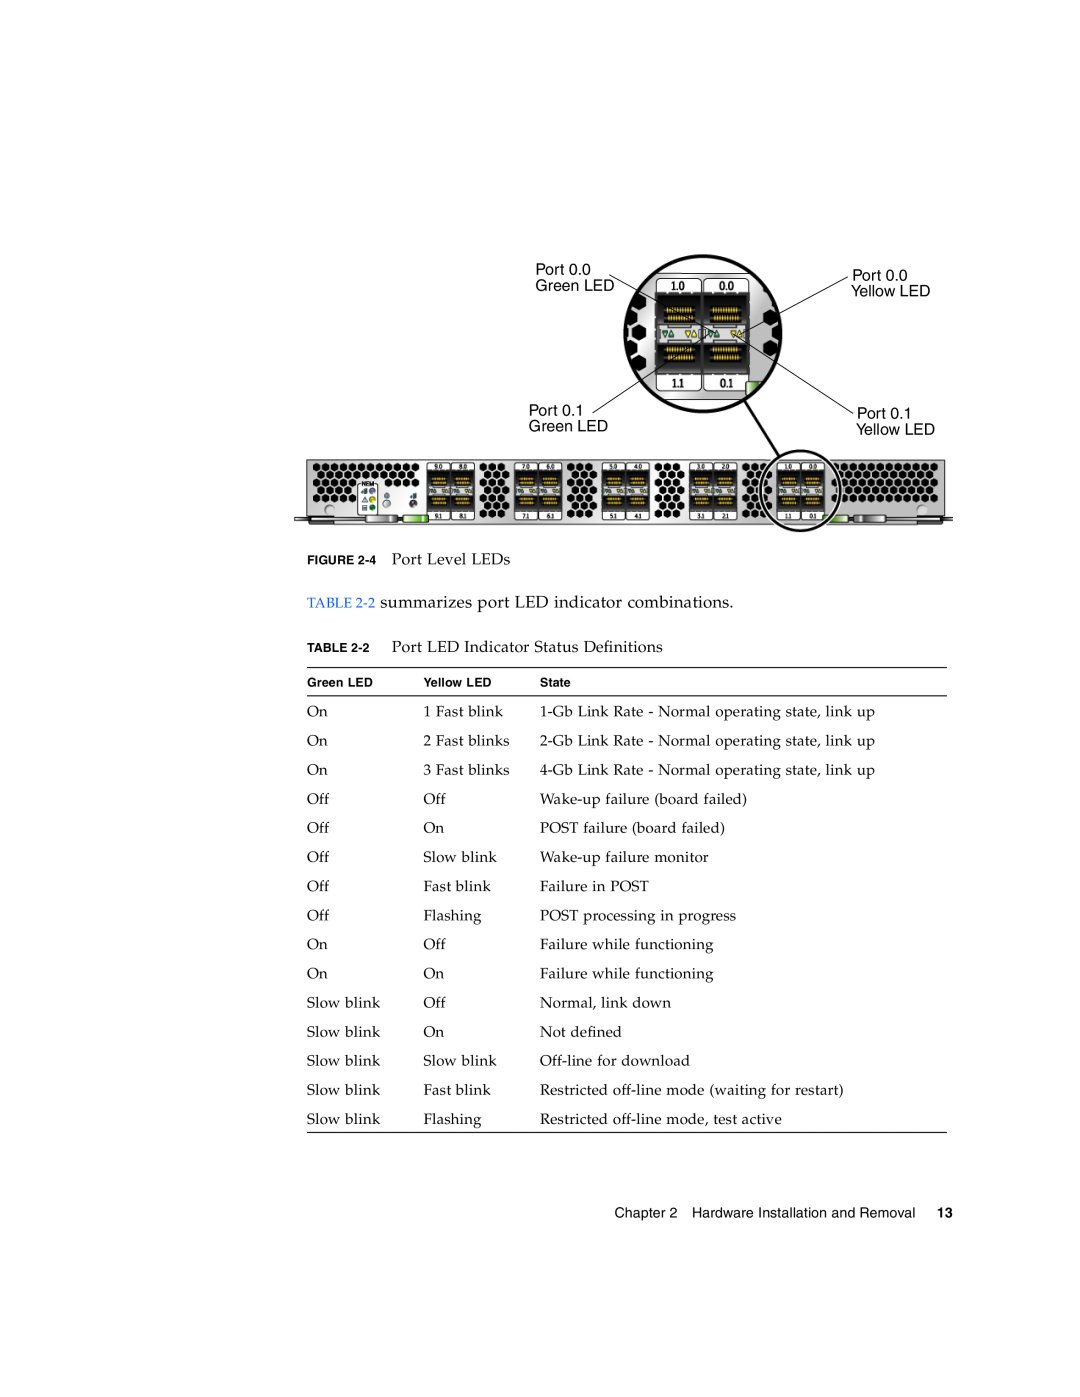 Sun Microsystems 2.0 manual 2 summarizes port LED indicator combinations, Port Green LED Port Green LED 